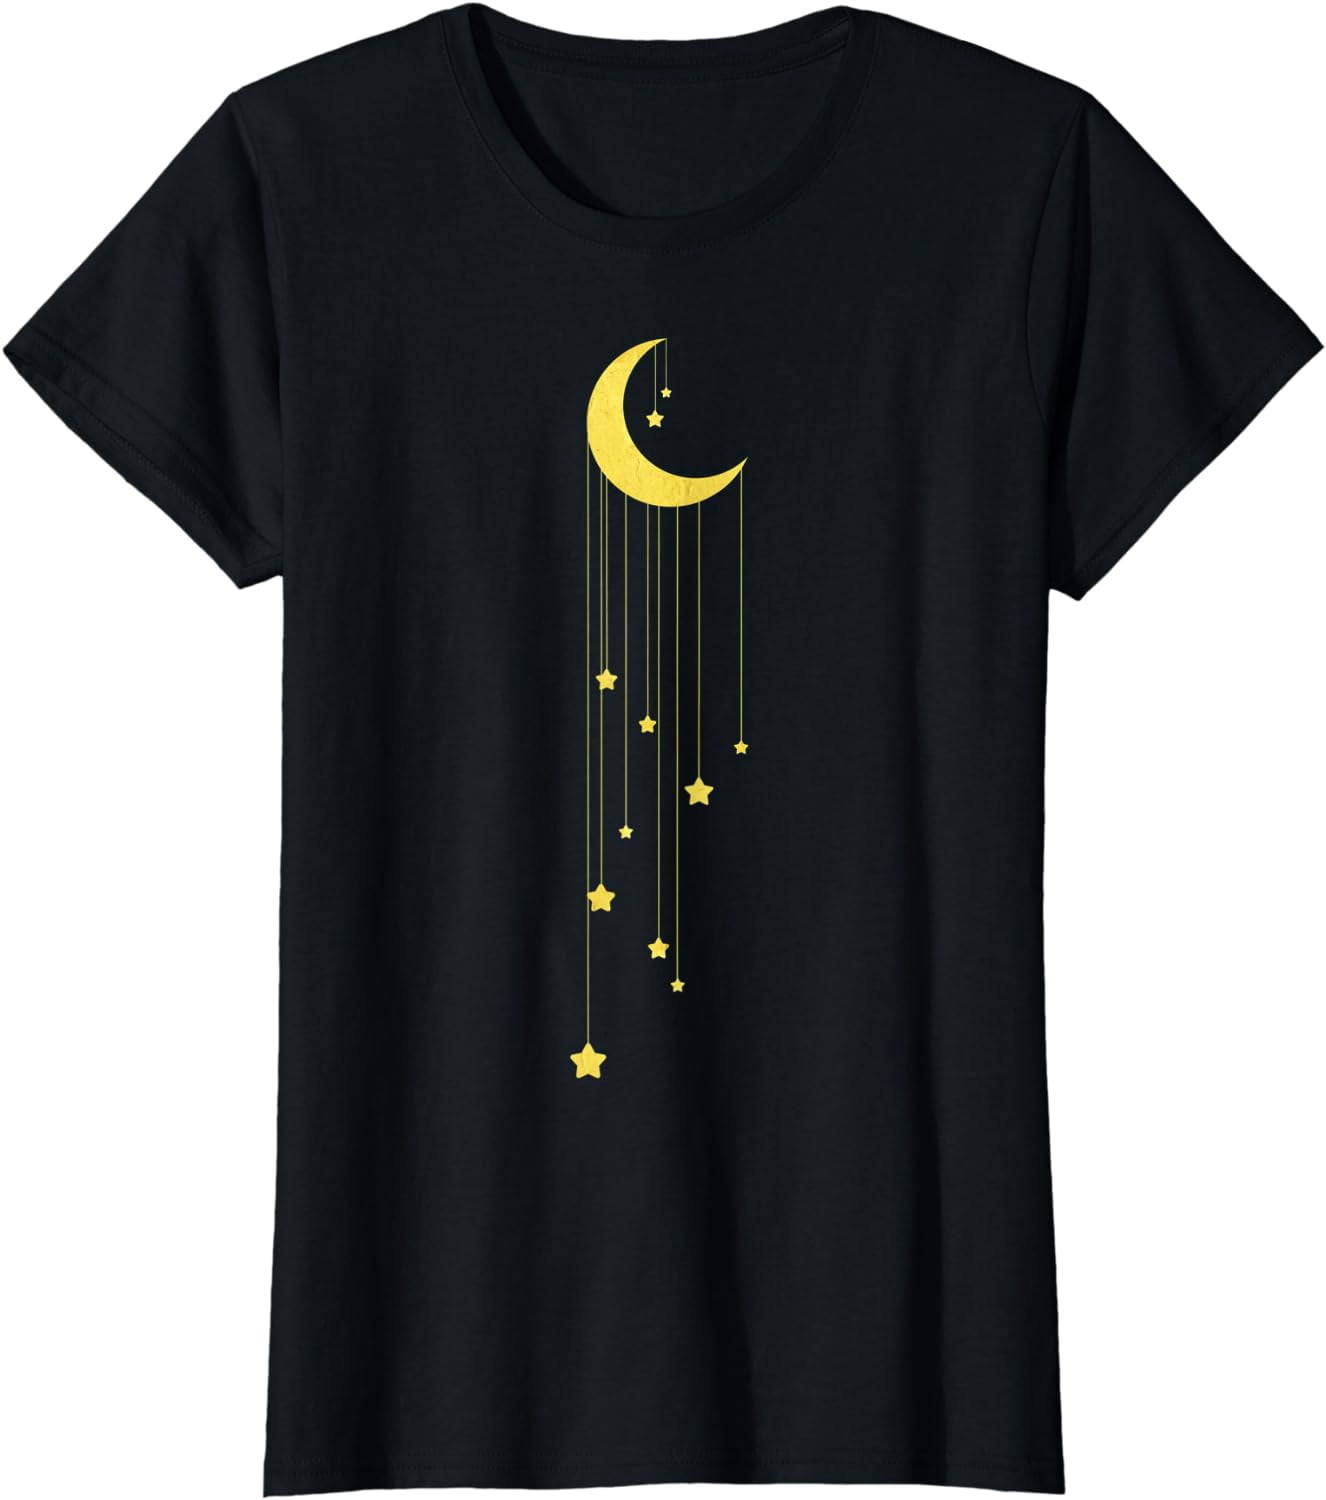 Gold Moon And Falling Stars Graphic T-Shirt - Walmart.com